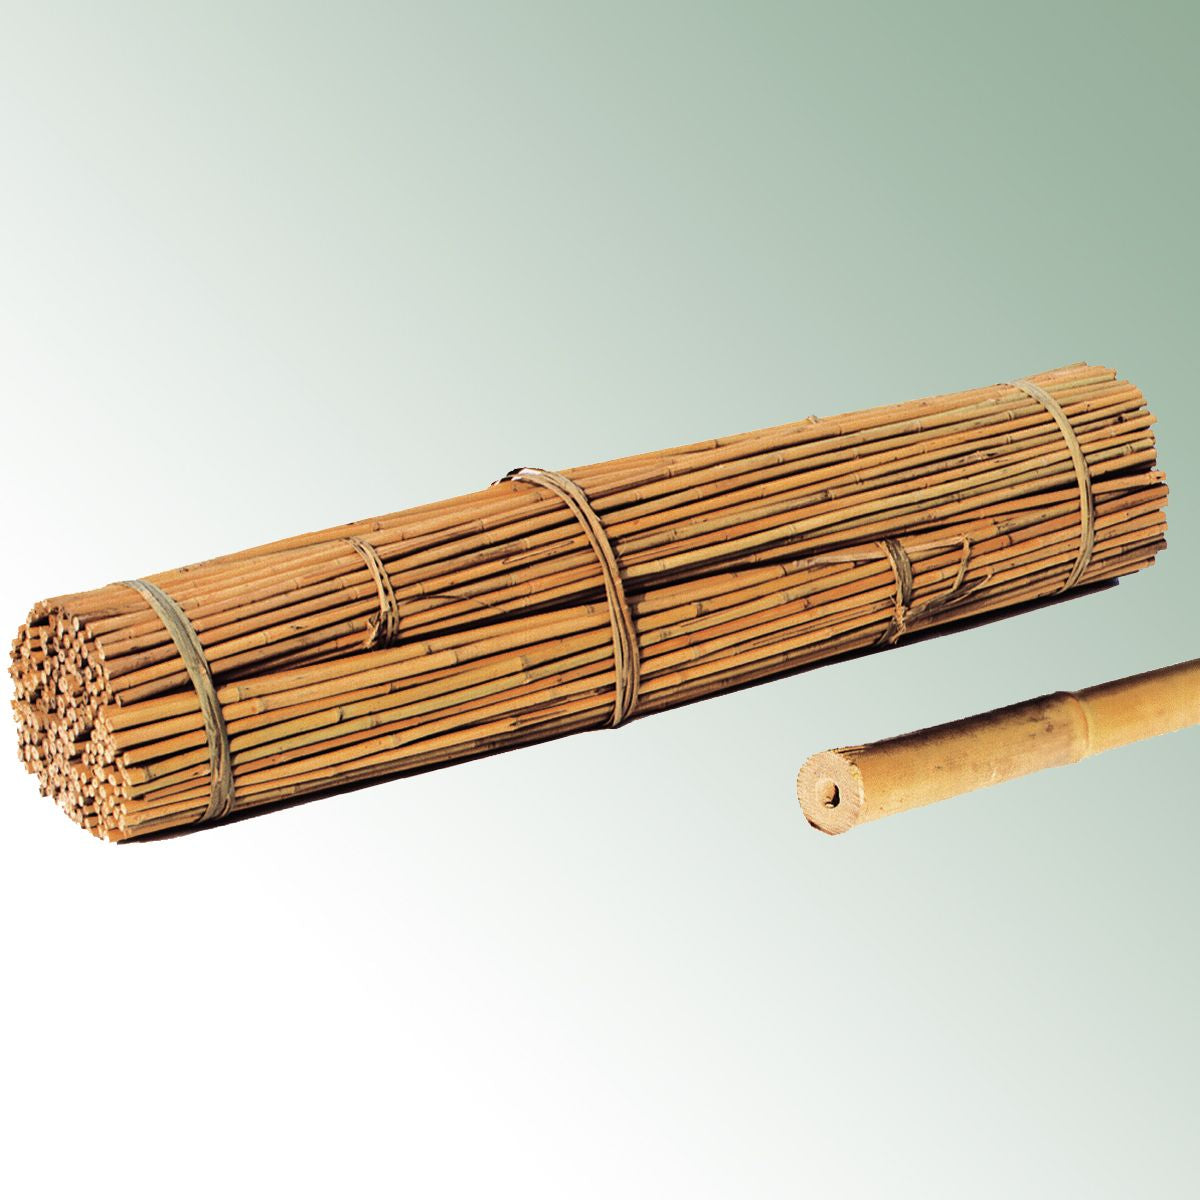 bamboo canes 183cm/15-17 - 6 Bale = 100 units